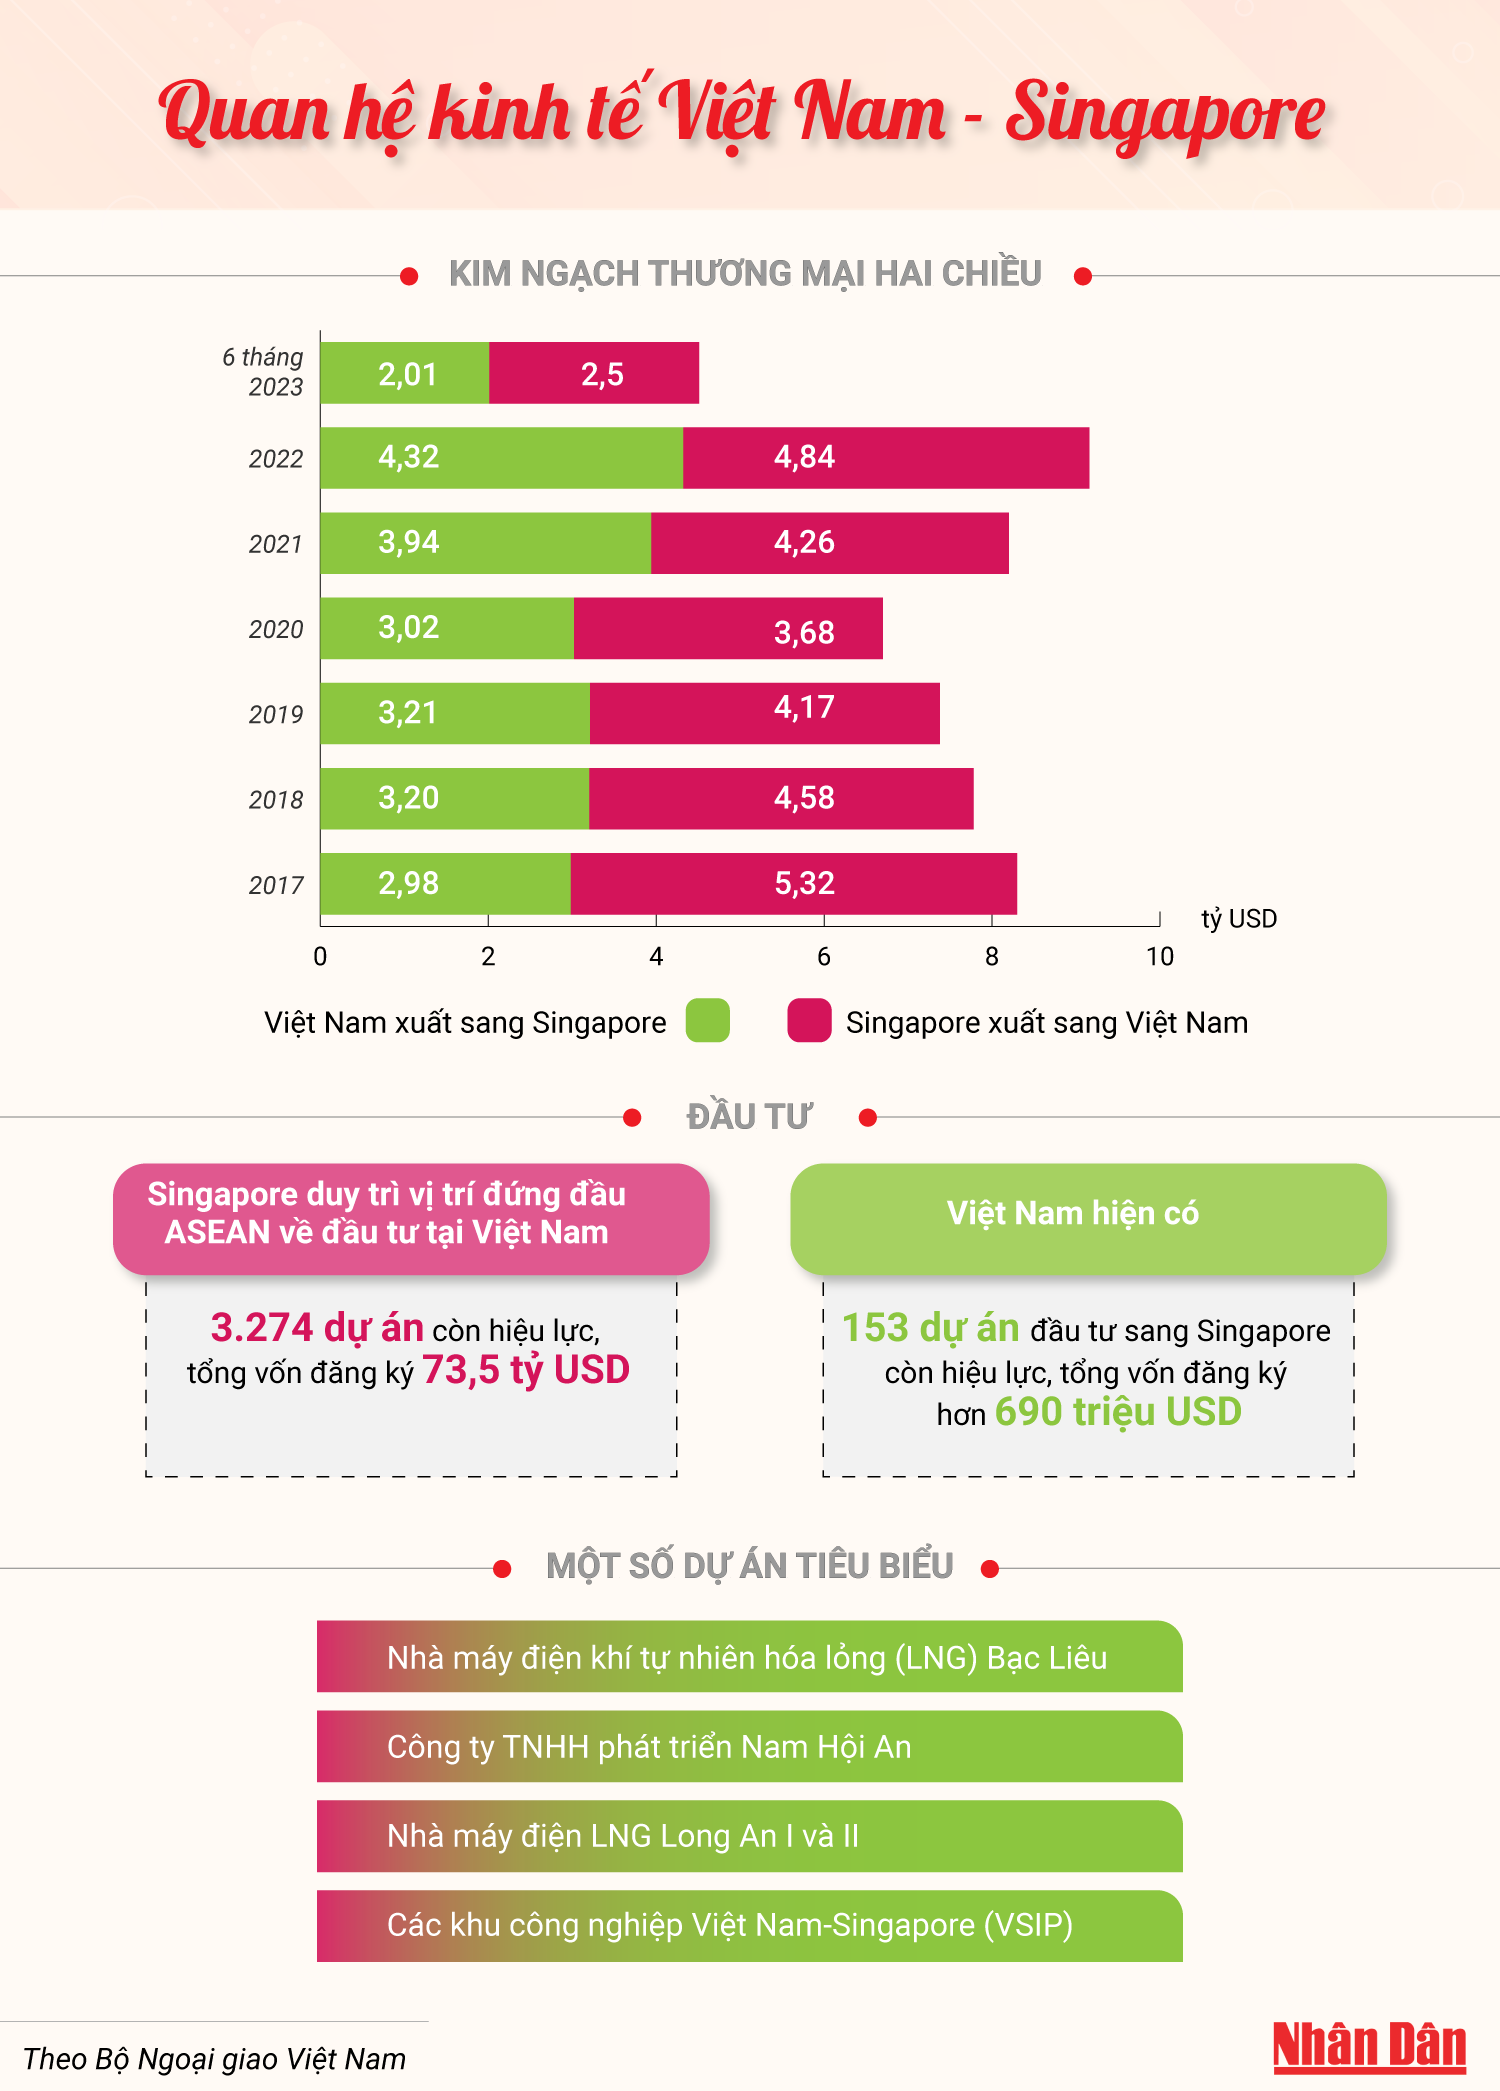 [Infographic] Quan hệ kinh tế Việt Nam-Singapore ảnh 1